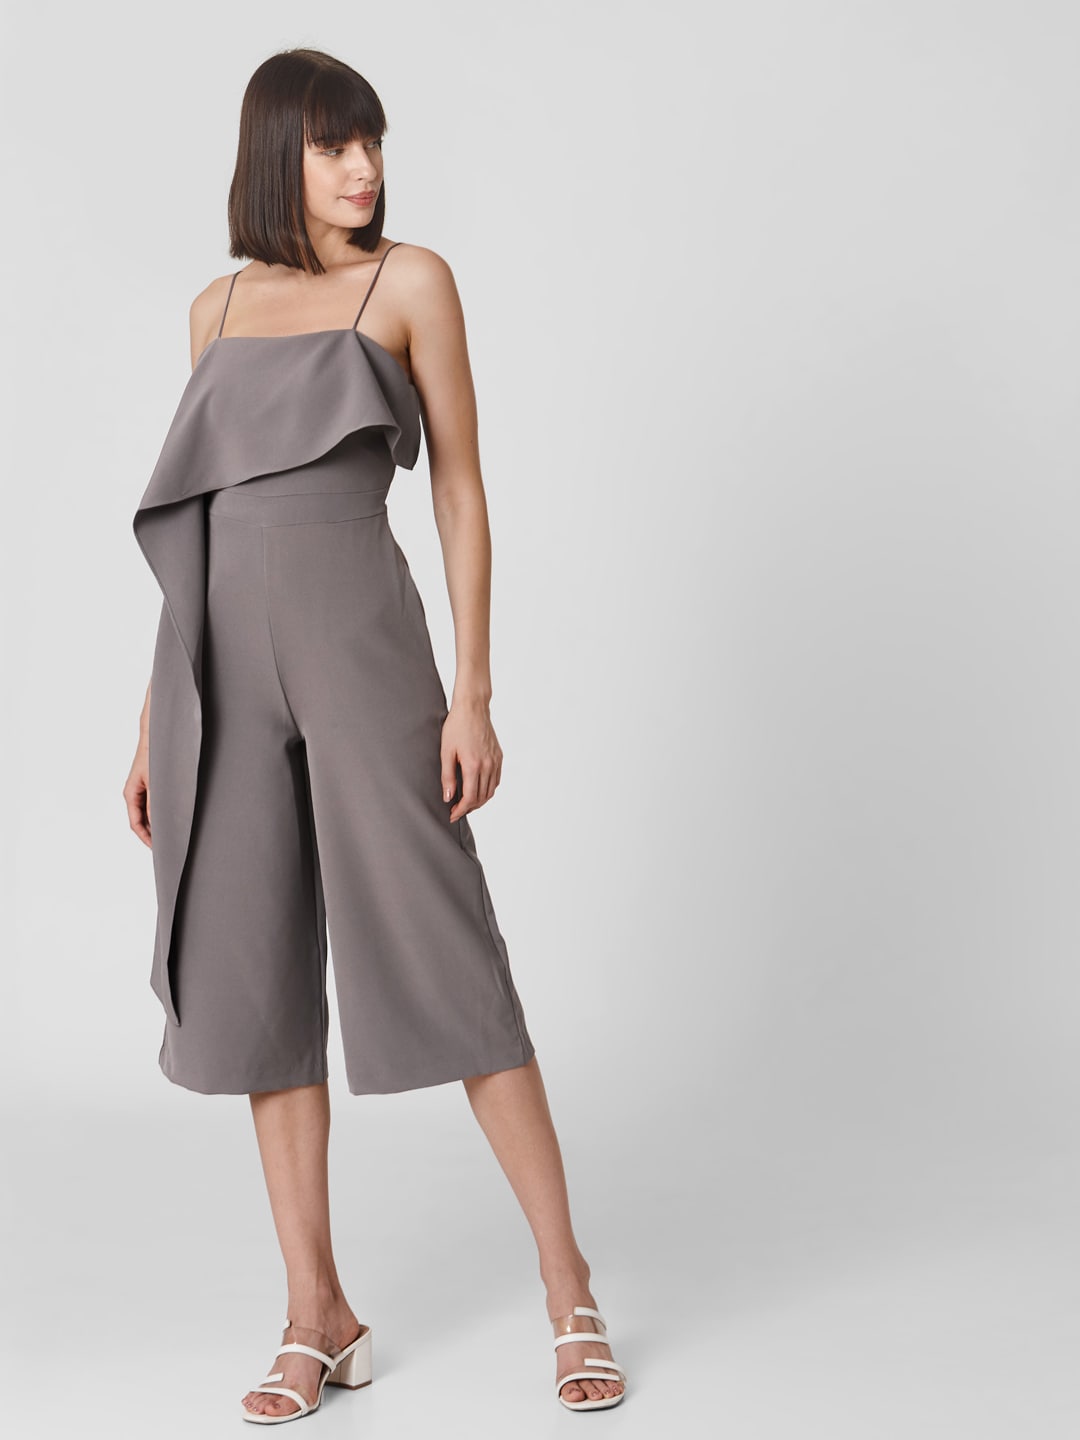 Vero Moda Women Grey Solid Ruffled Capri Jumpsuit Price in India